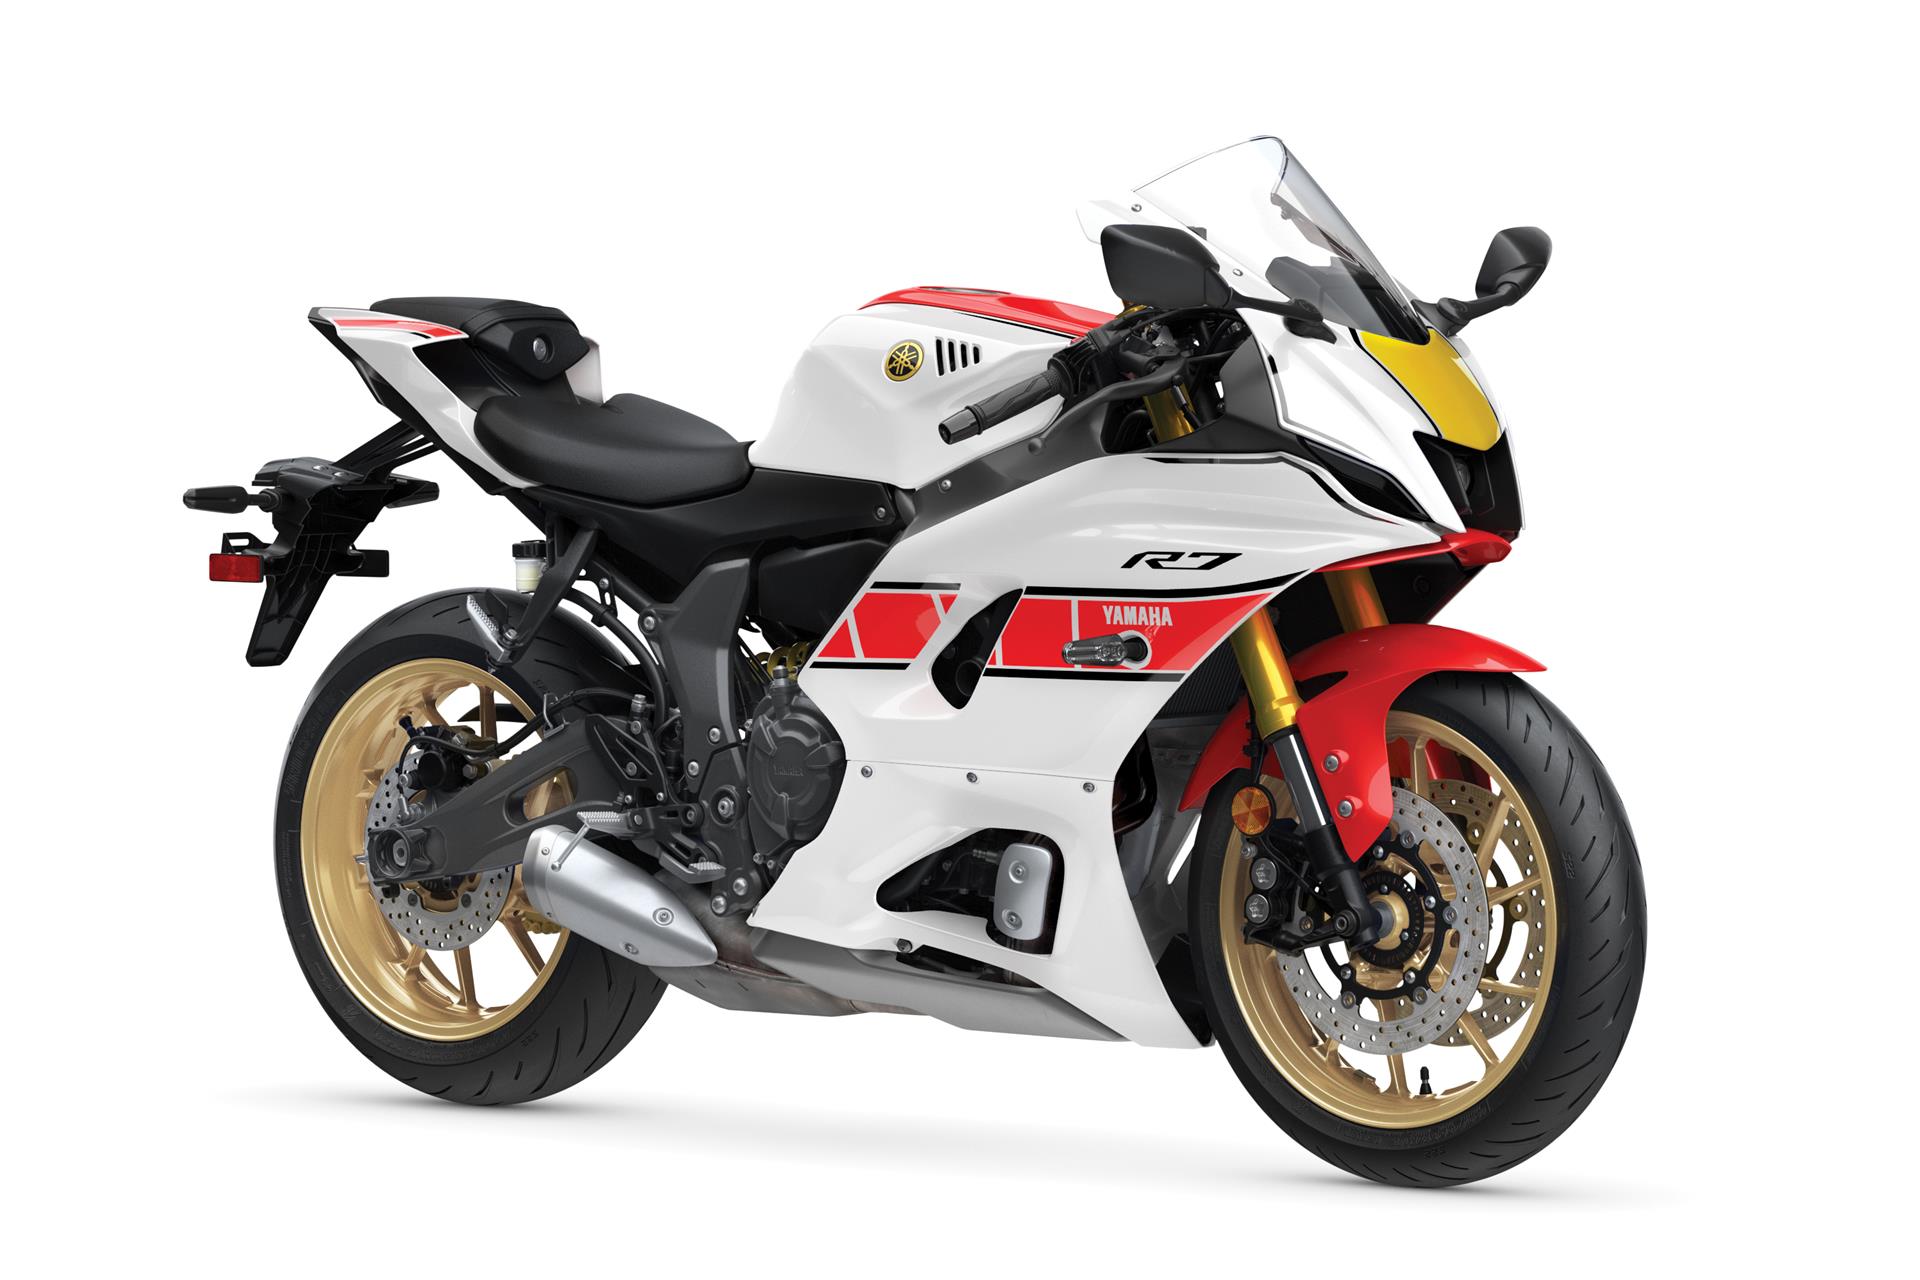 2022 Yamaha R7 World GP 60th Anniversary Edition in Heritage Red and White Studio Glamor Shot